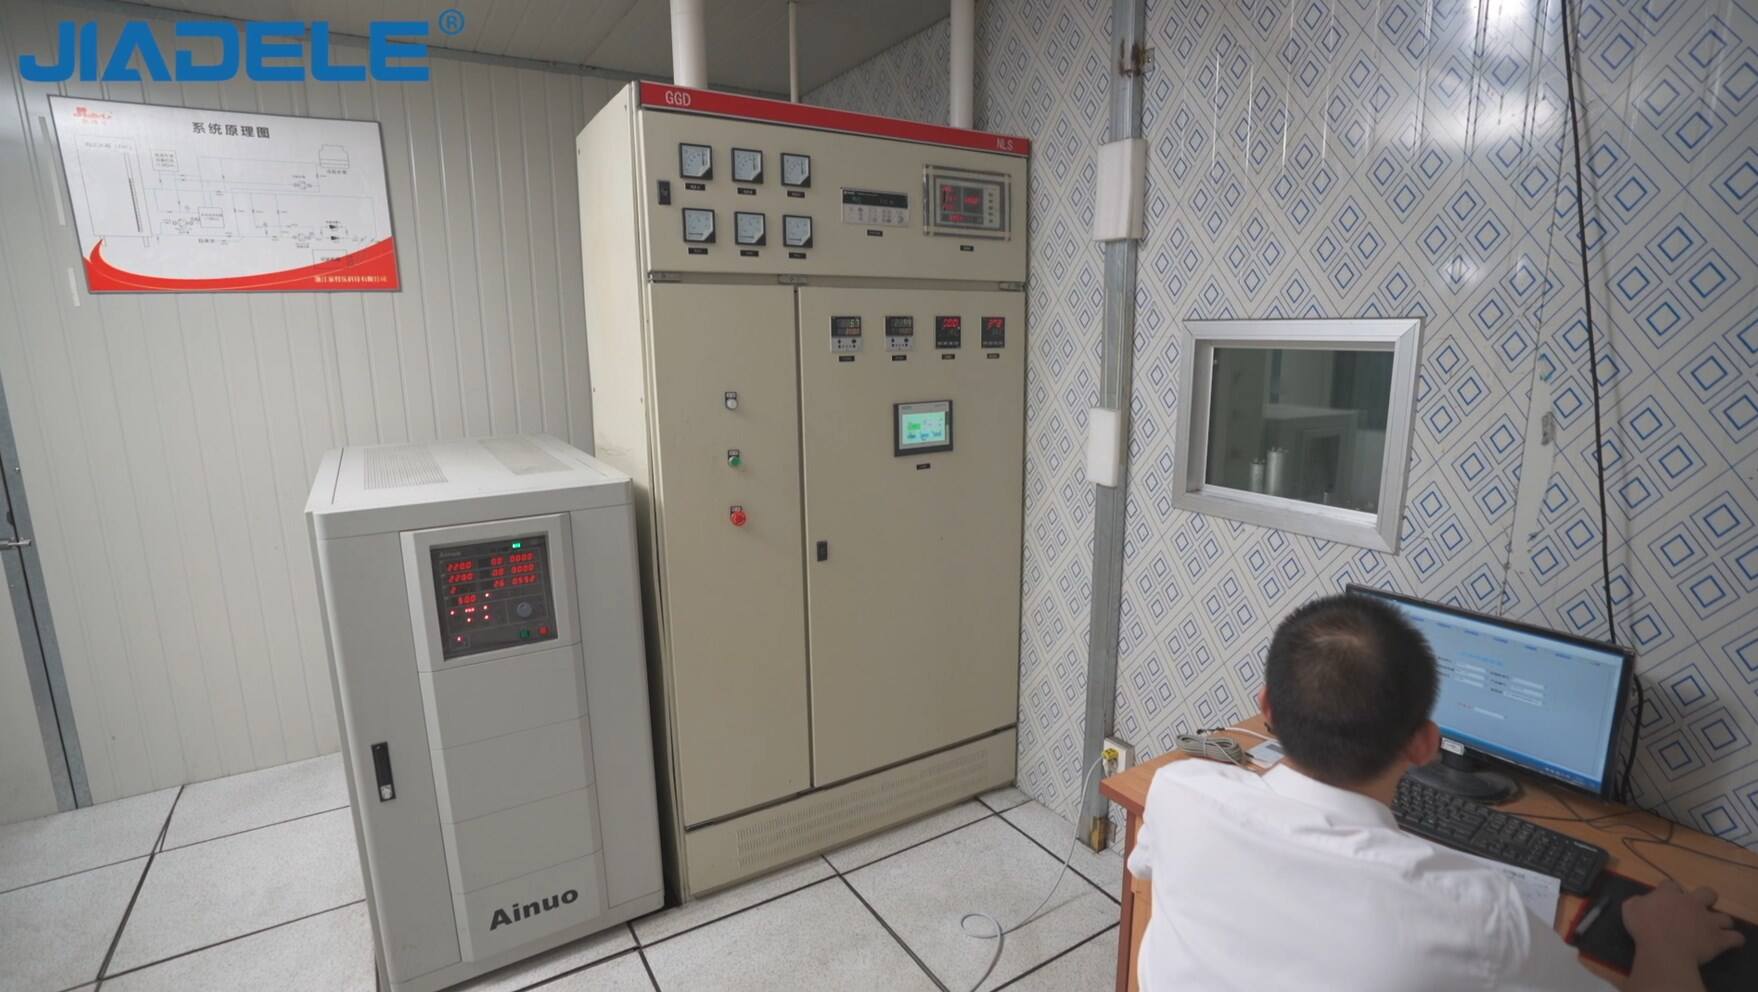 Ultra-low temperature laboratory testing equipment